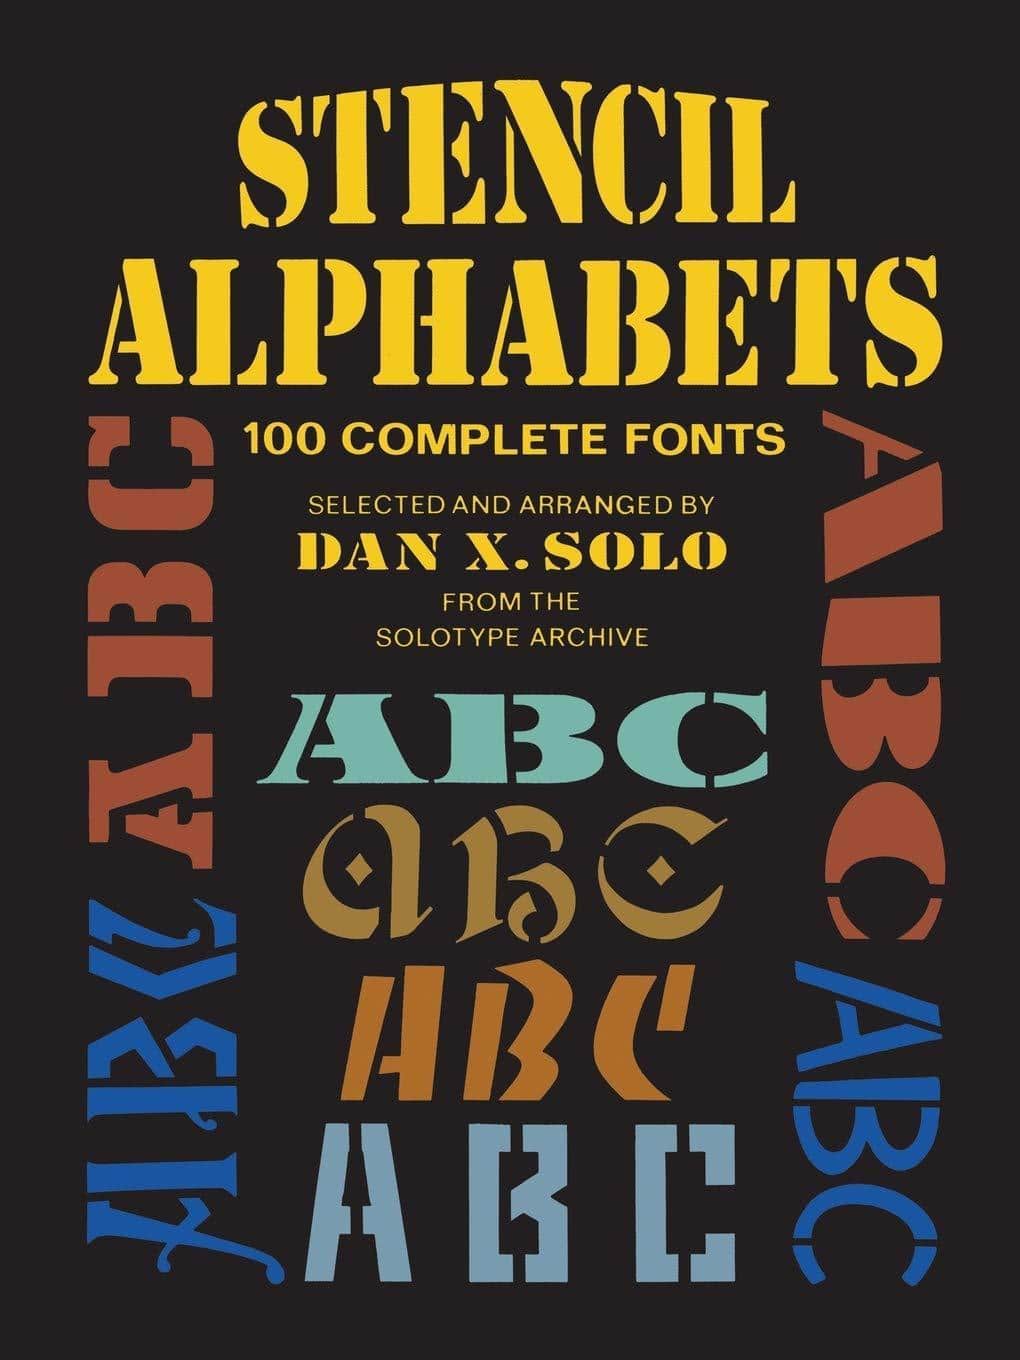 Stencil Alphabets - SureShot Books Publishing LLC